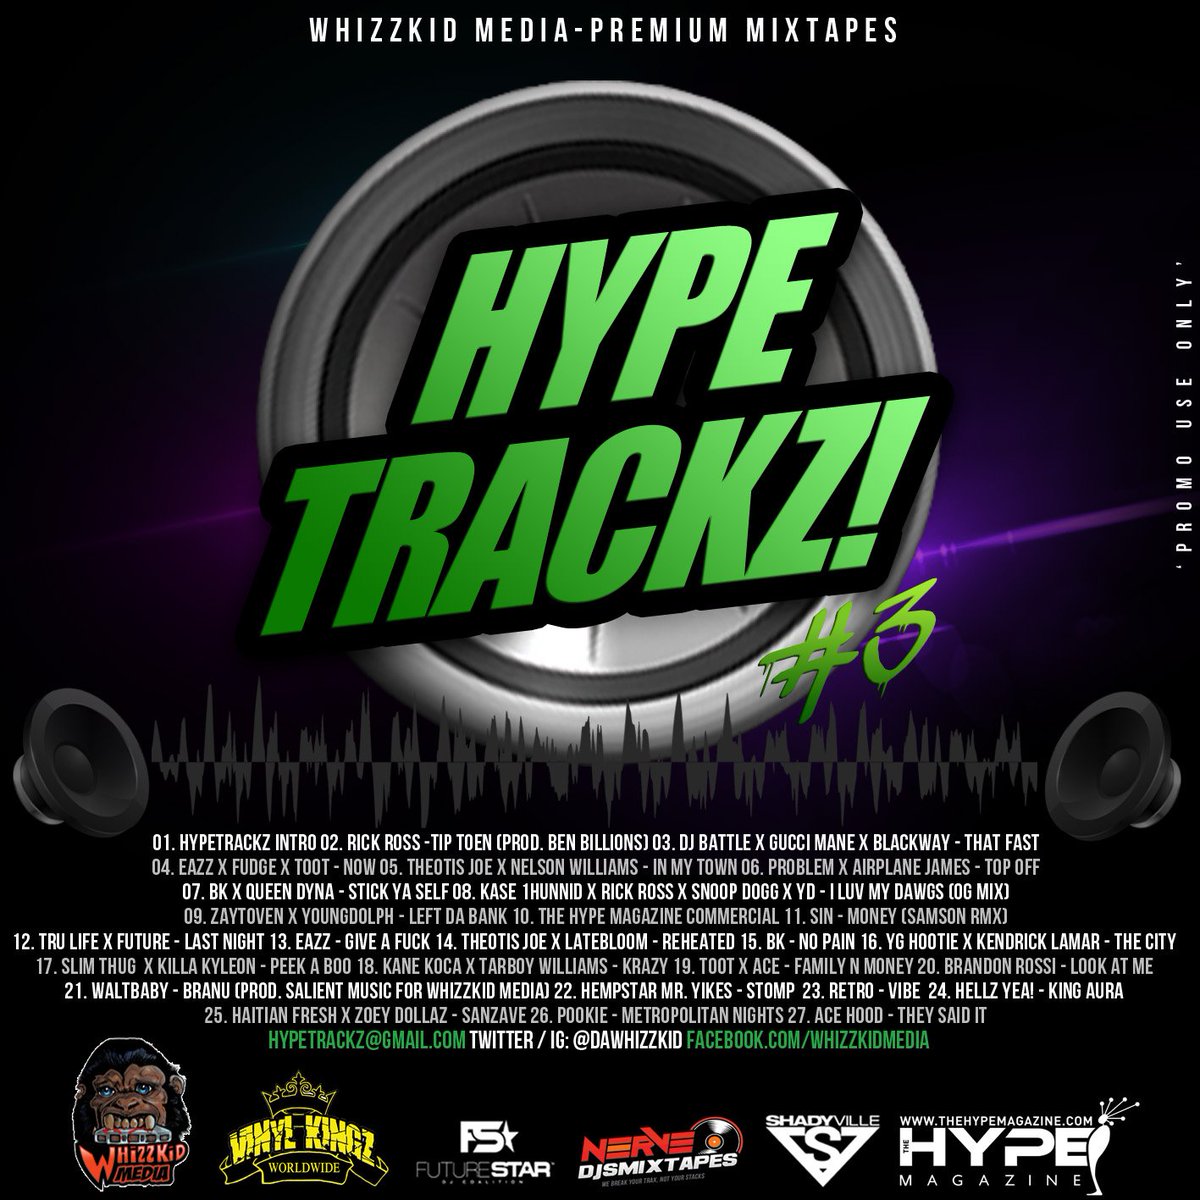 Check out the best indie and major tunes on 'HypeTrackz Vol. 3' mixtape:  audiomack.com/album/the-whiz…  
#HipHop #Rap #HipHopMixtape #WhizzKidMedia #Mixtape #Mixtapeslots #SinglePromo #Rapmusic #Trap #Trapmusic #Mixtapedownload #HipHopStream #dawhizzkid